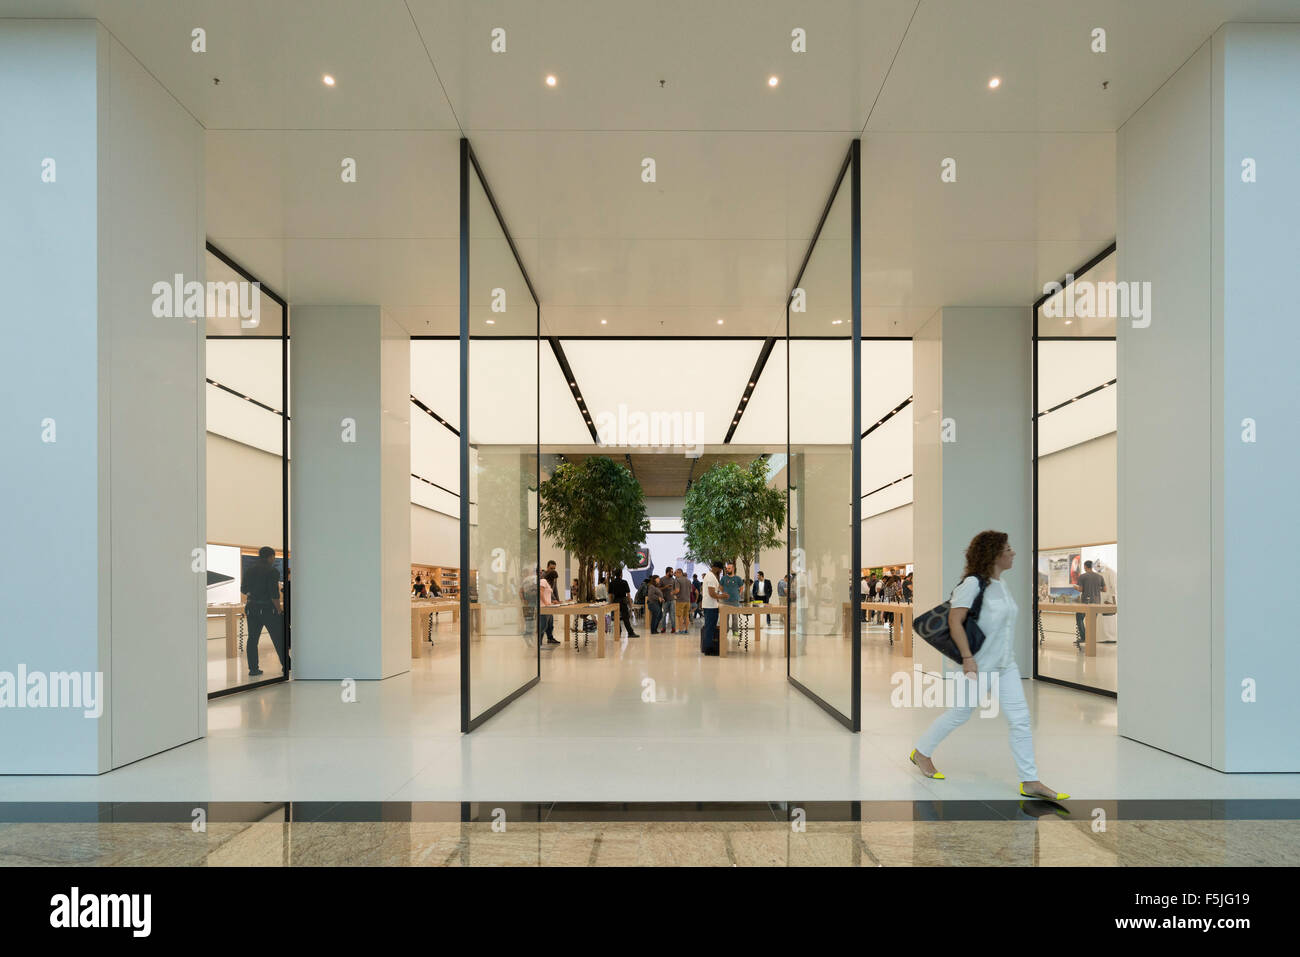 Glendale Galleria - Apple Store - Apple